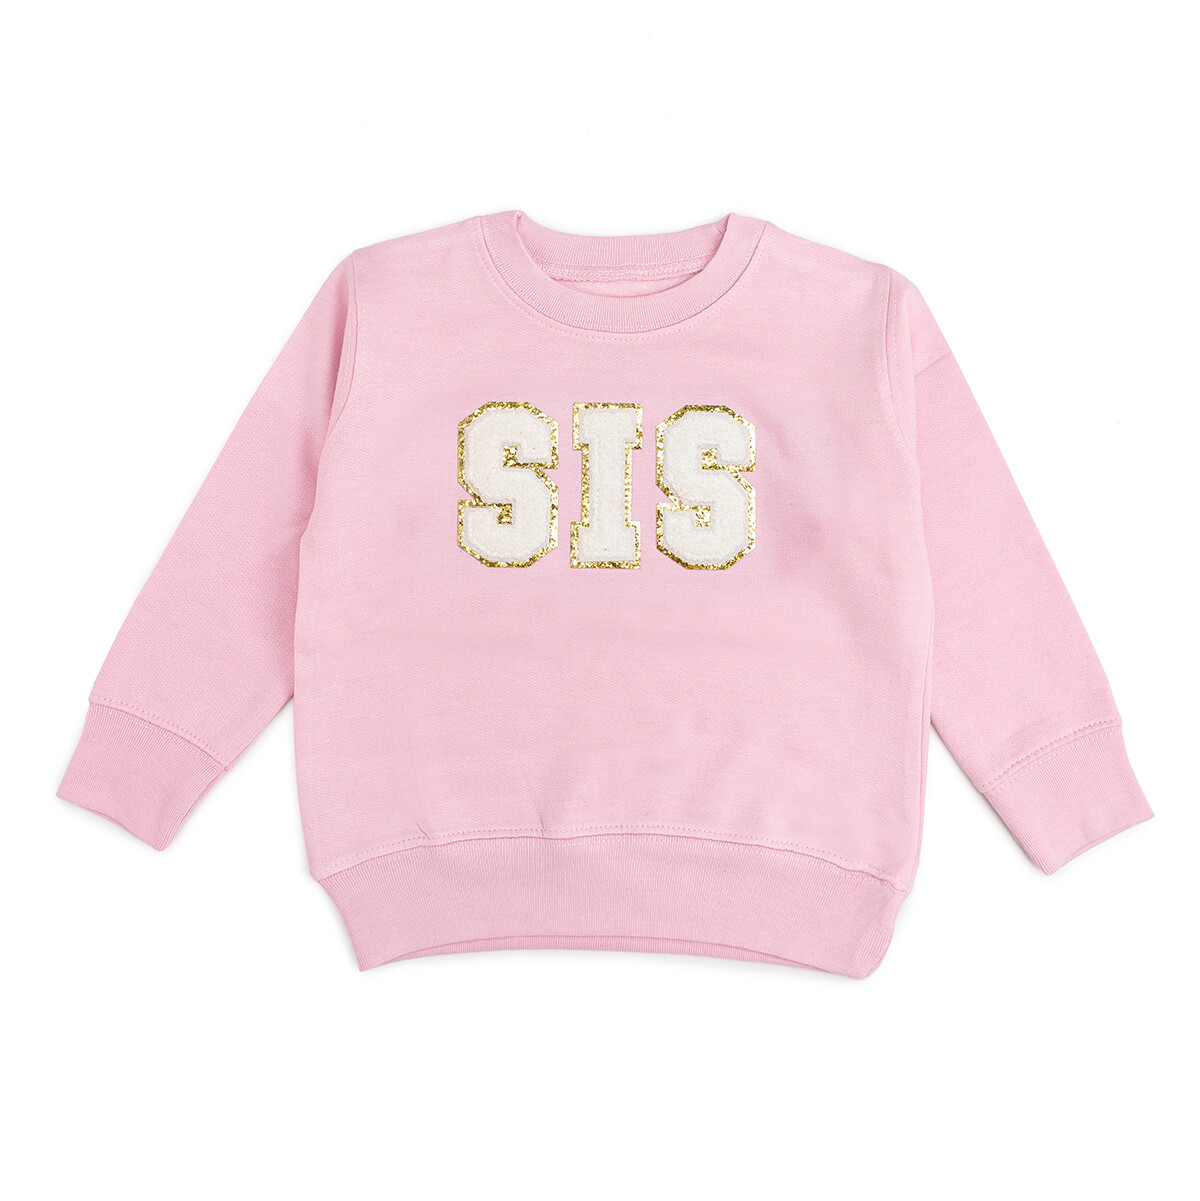 Sis Patch Sweatshirt, Size: 3T